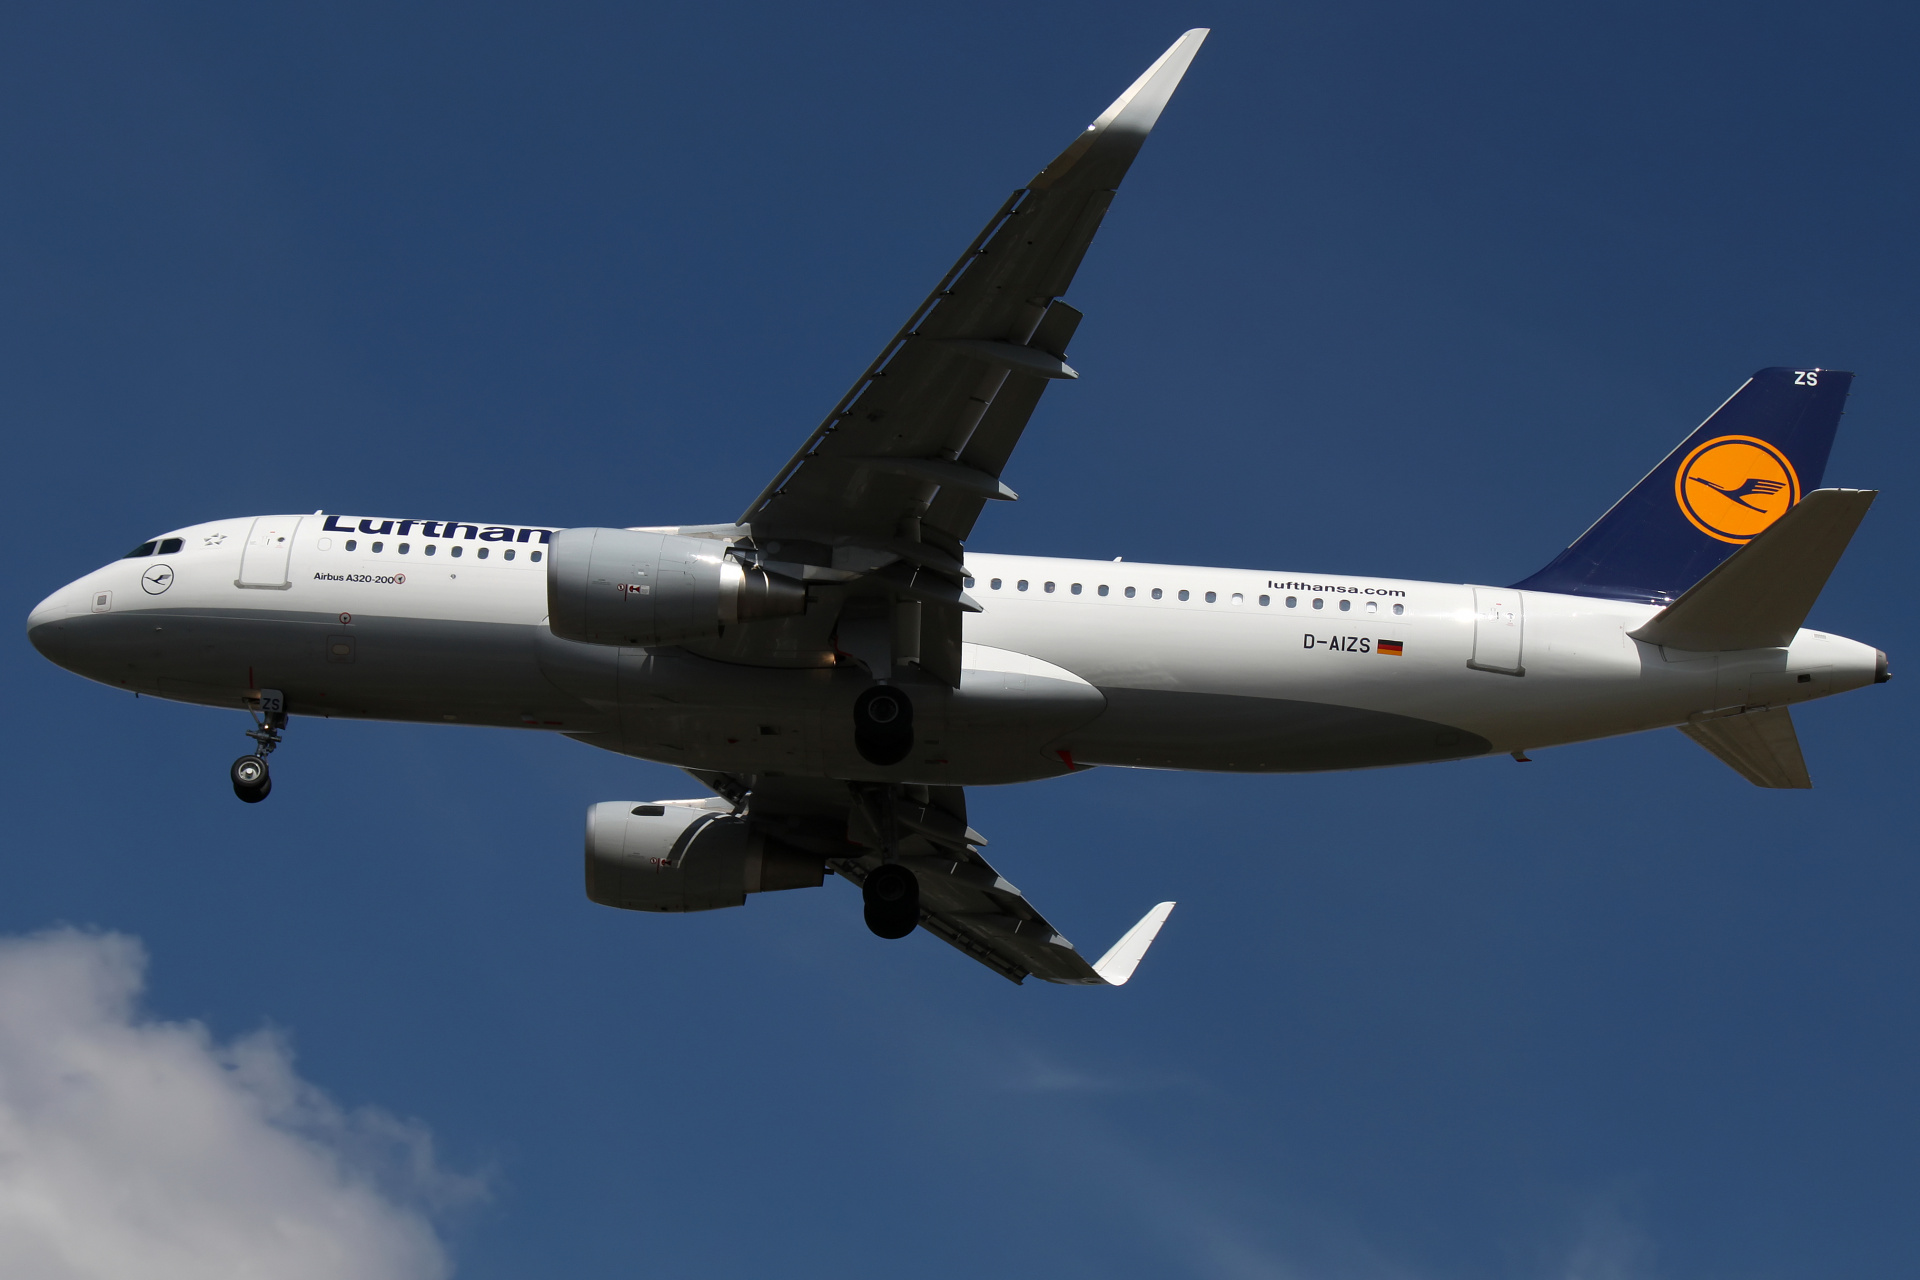 D-AIZS (Aircraft » EPWA Spotting » Airbus A320-200 » Lufthansa)